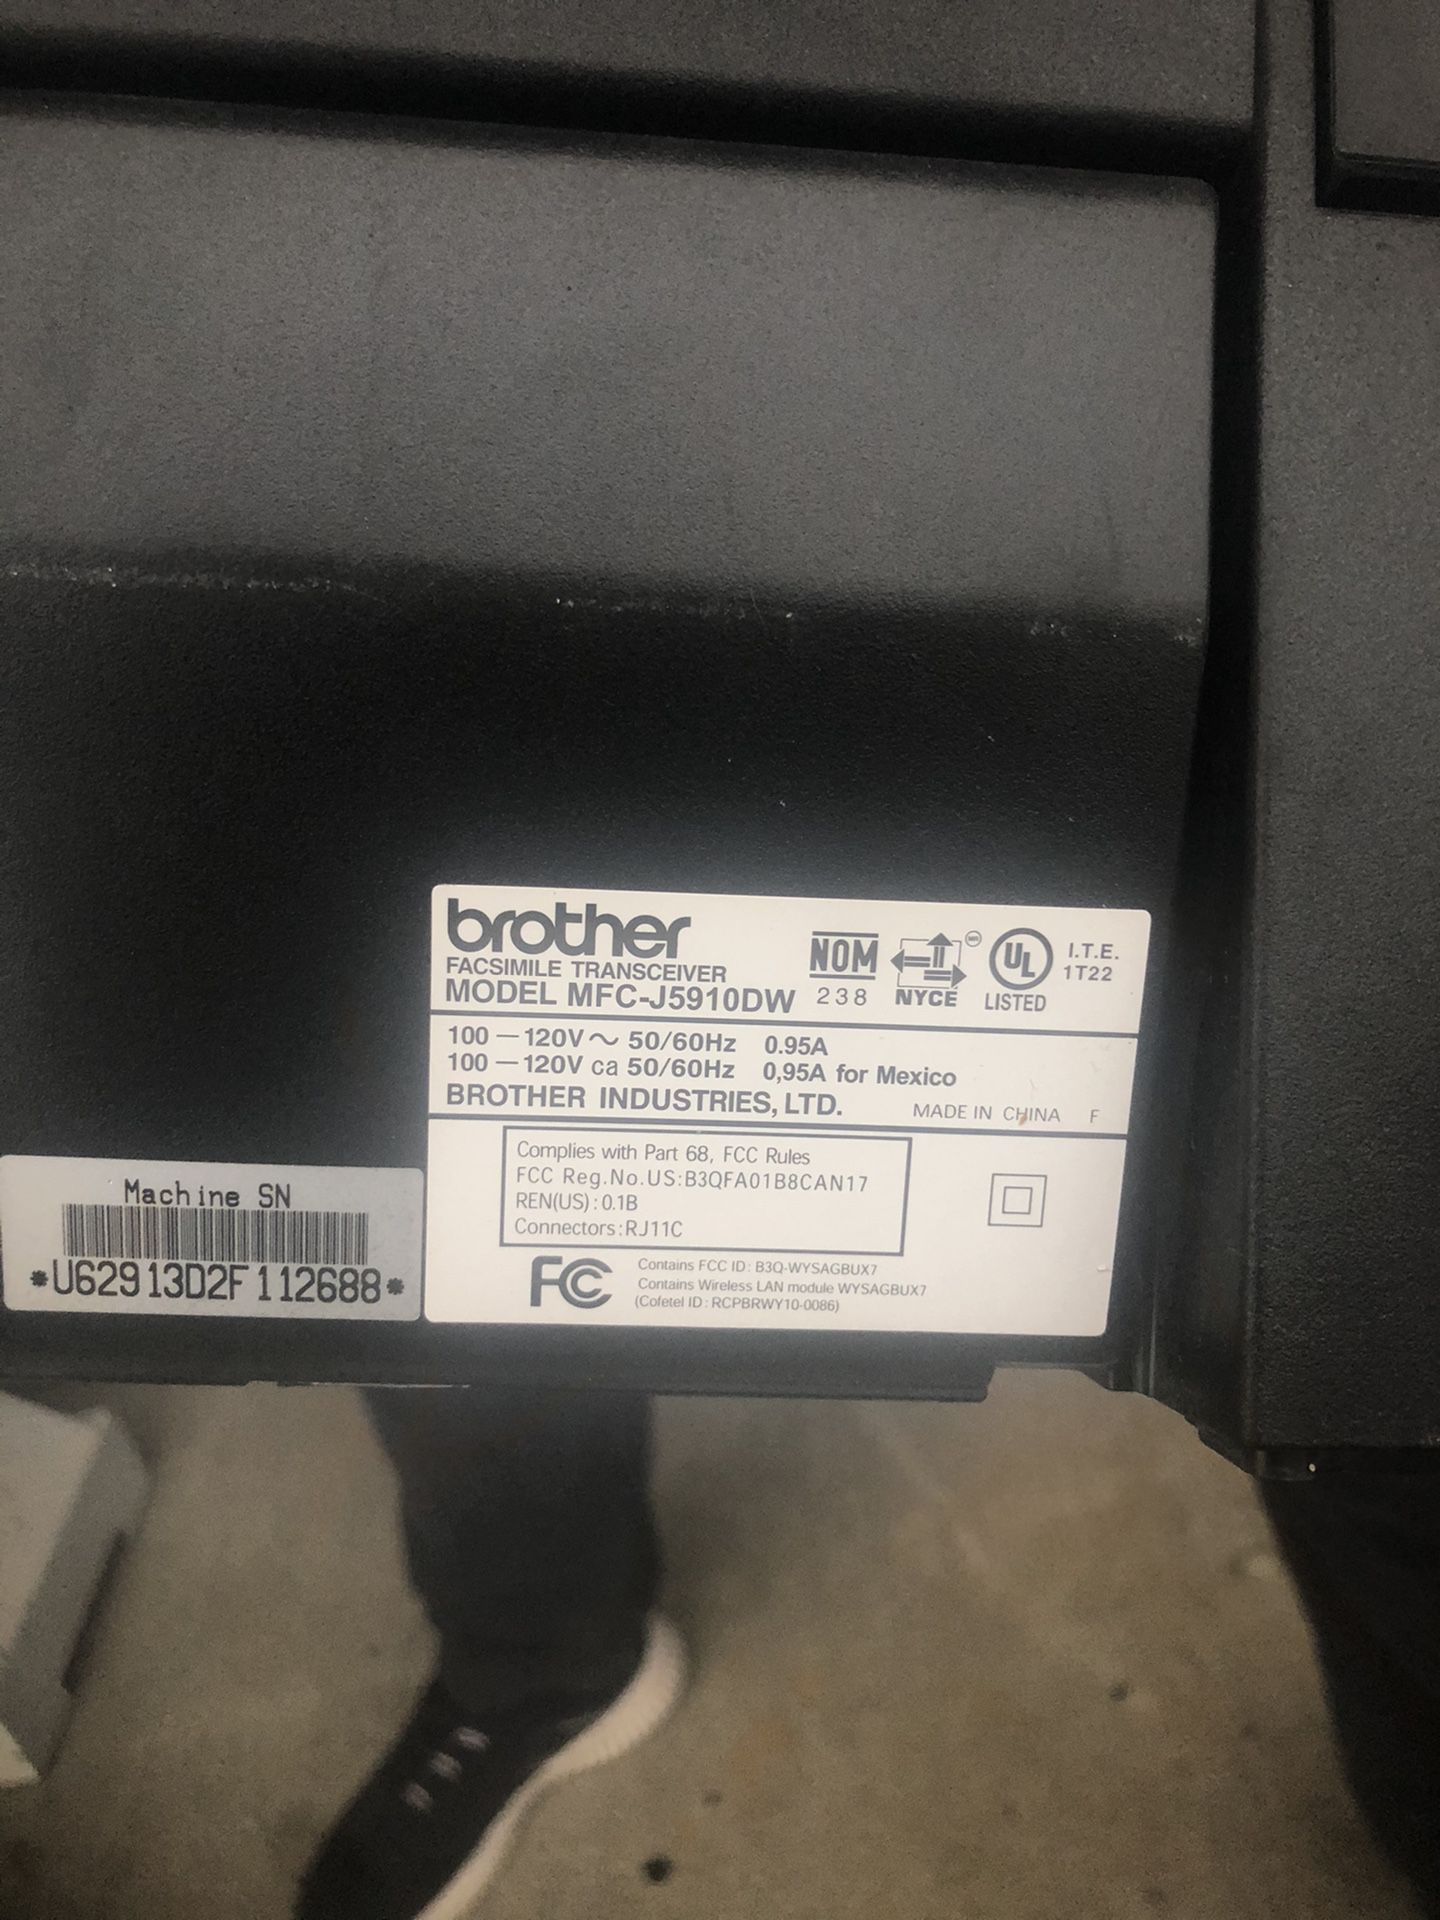 Brother printer scanner fax machine